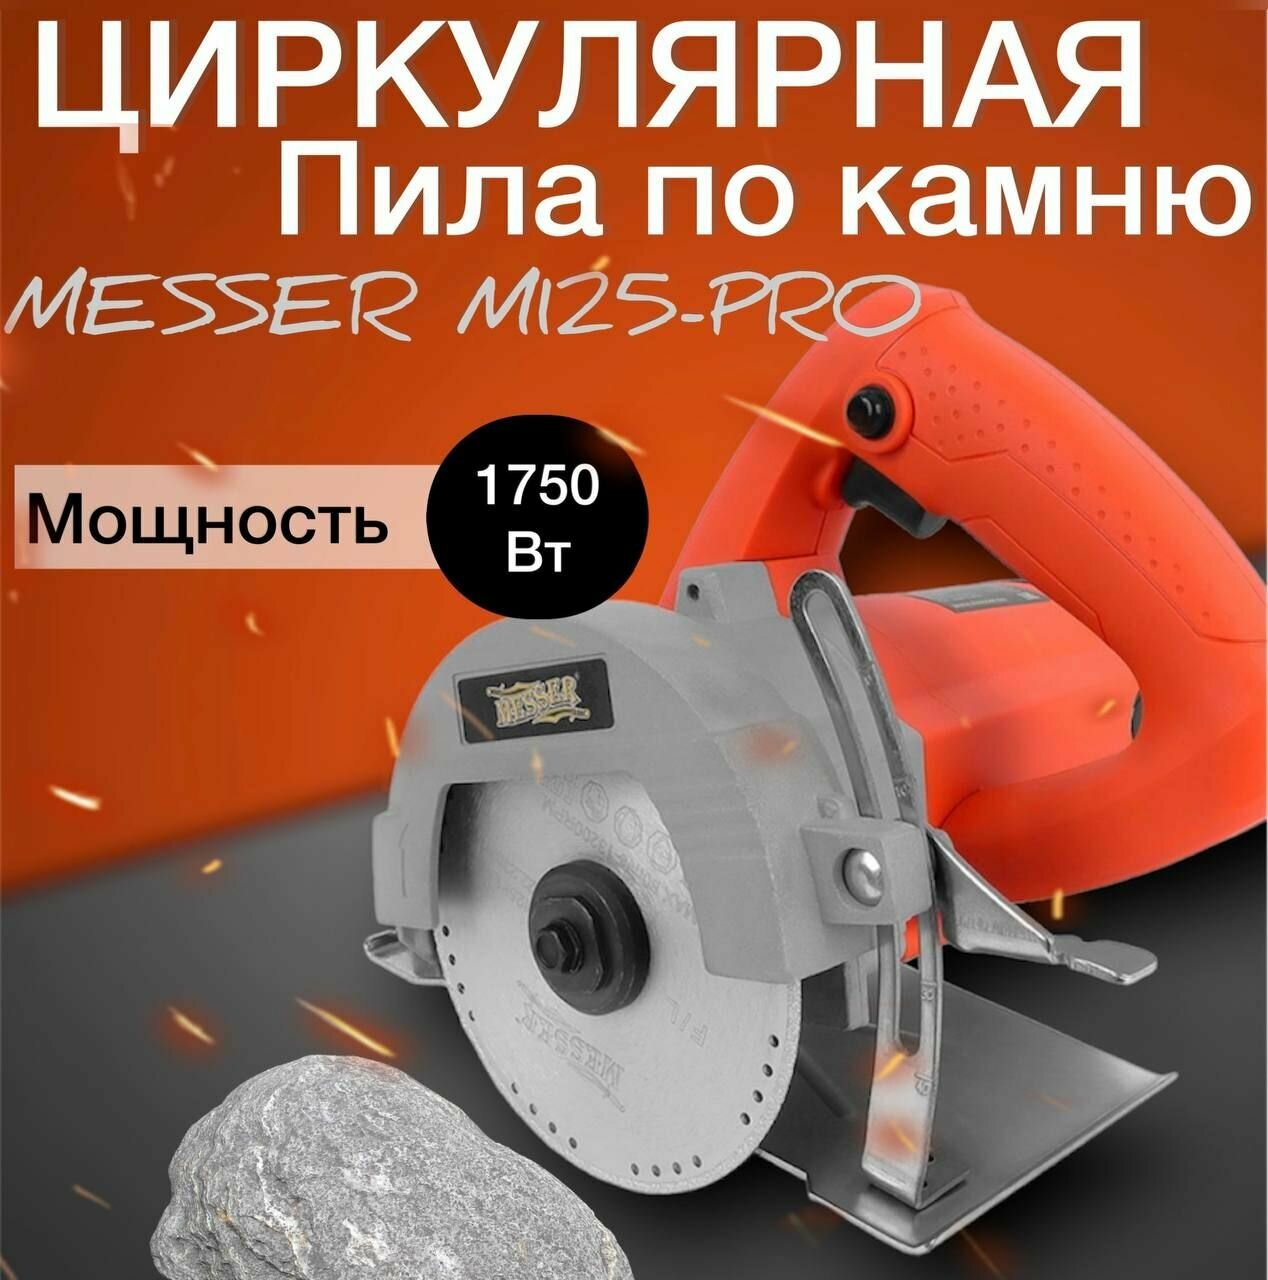 Циркулярная пила по камню MESSER M125-PRO - фотография № 2